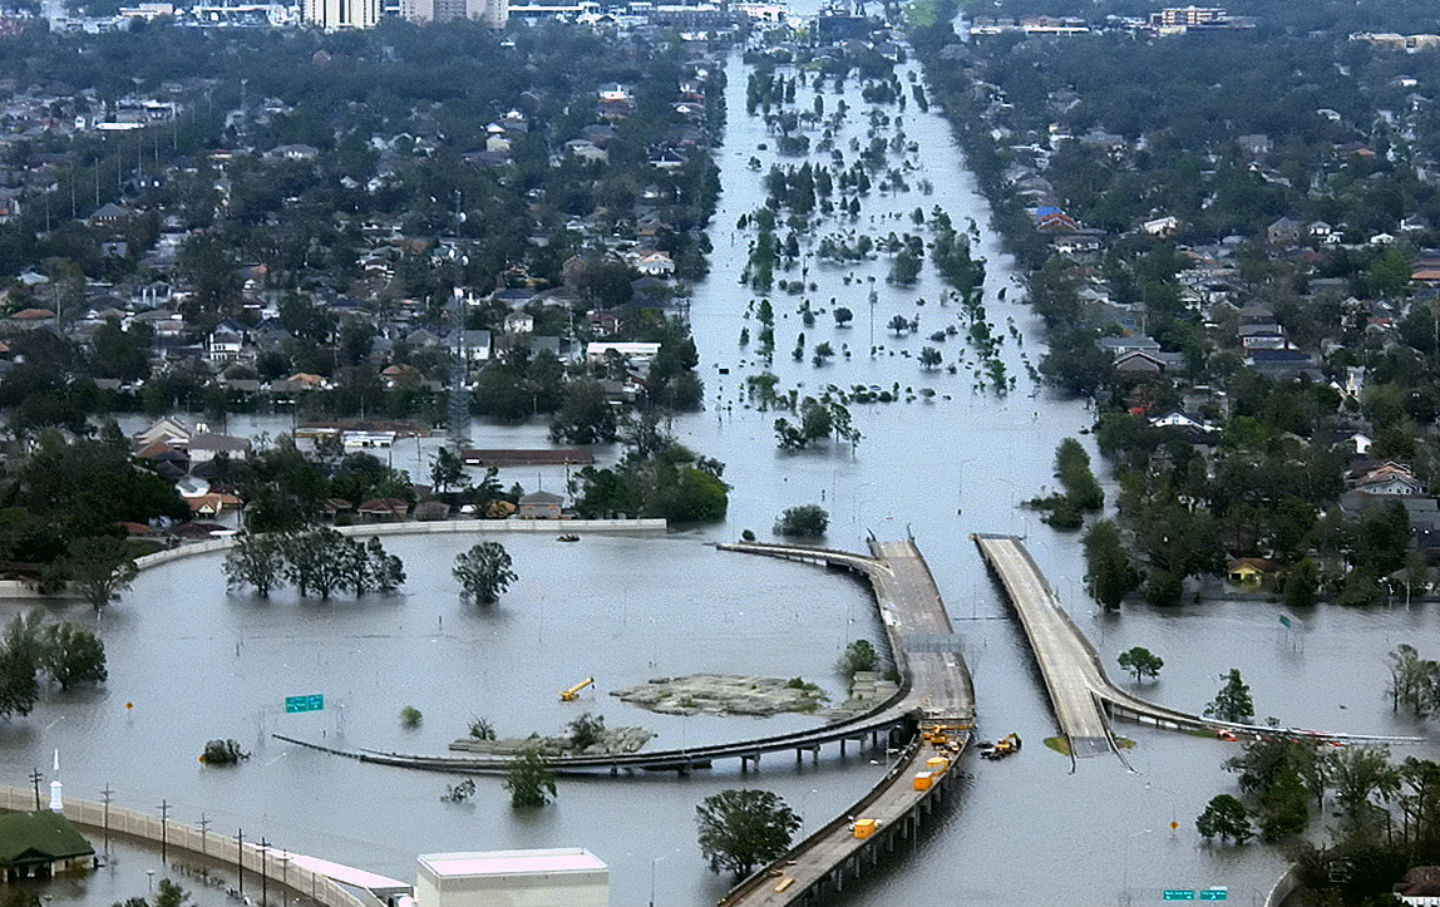 August 29, 2005: Hurricane Katrina Strikes the Gulf Coast